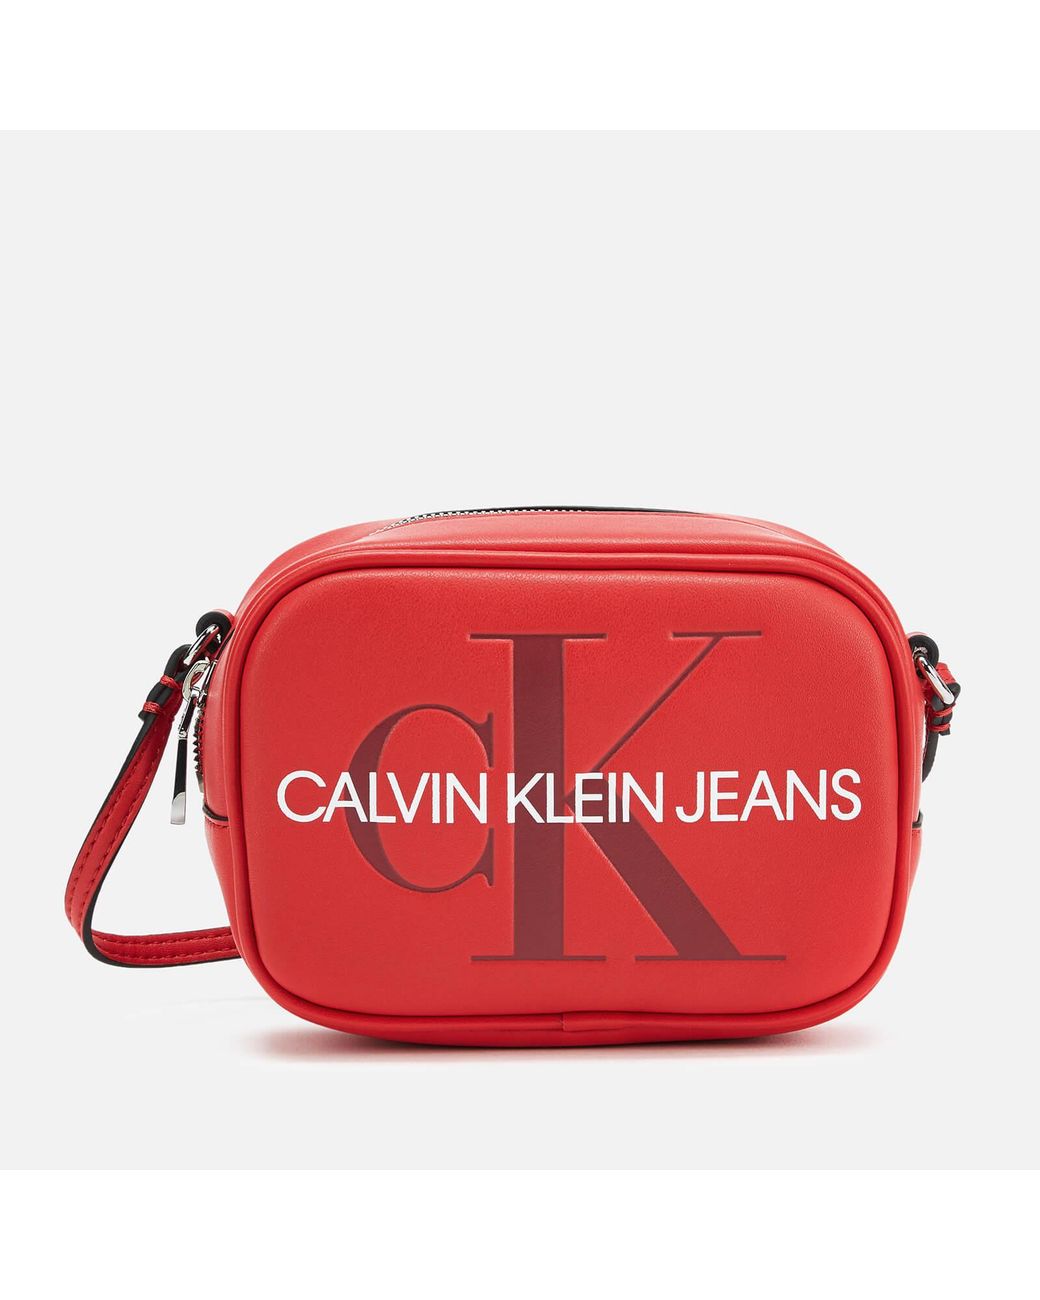 Calvin Klein Monogram Camera Bag in Red - Lyst